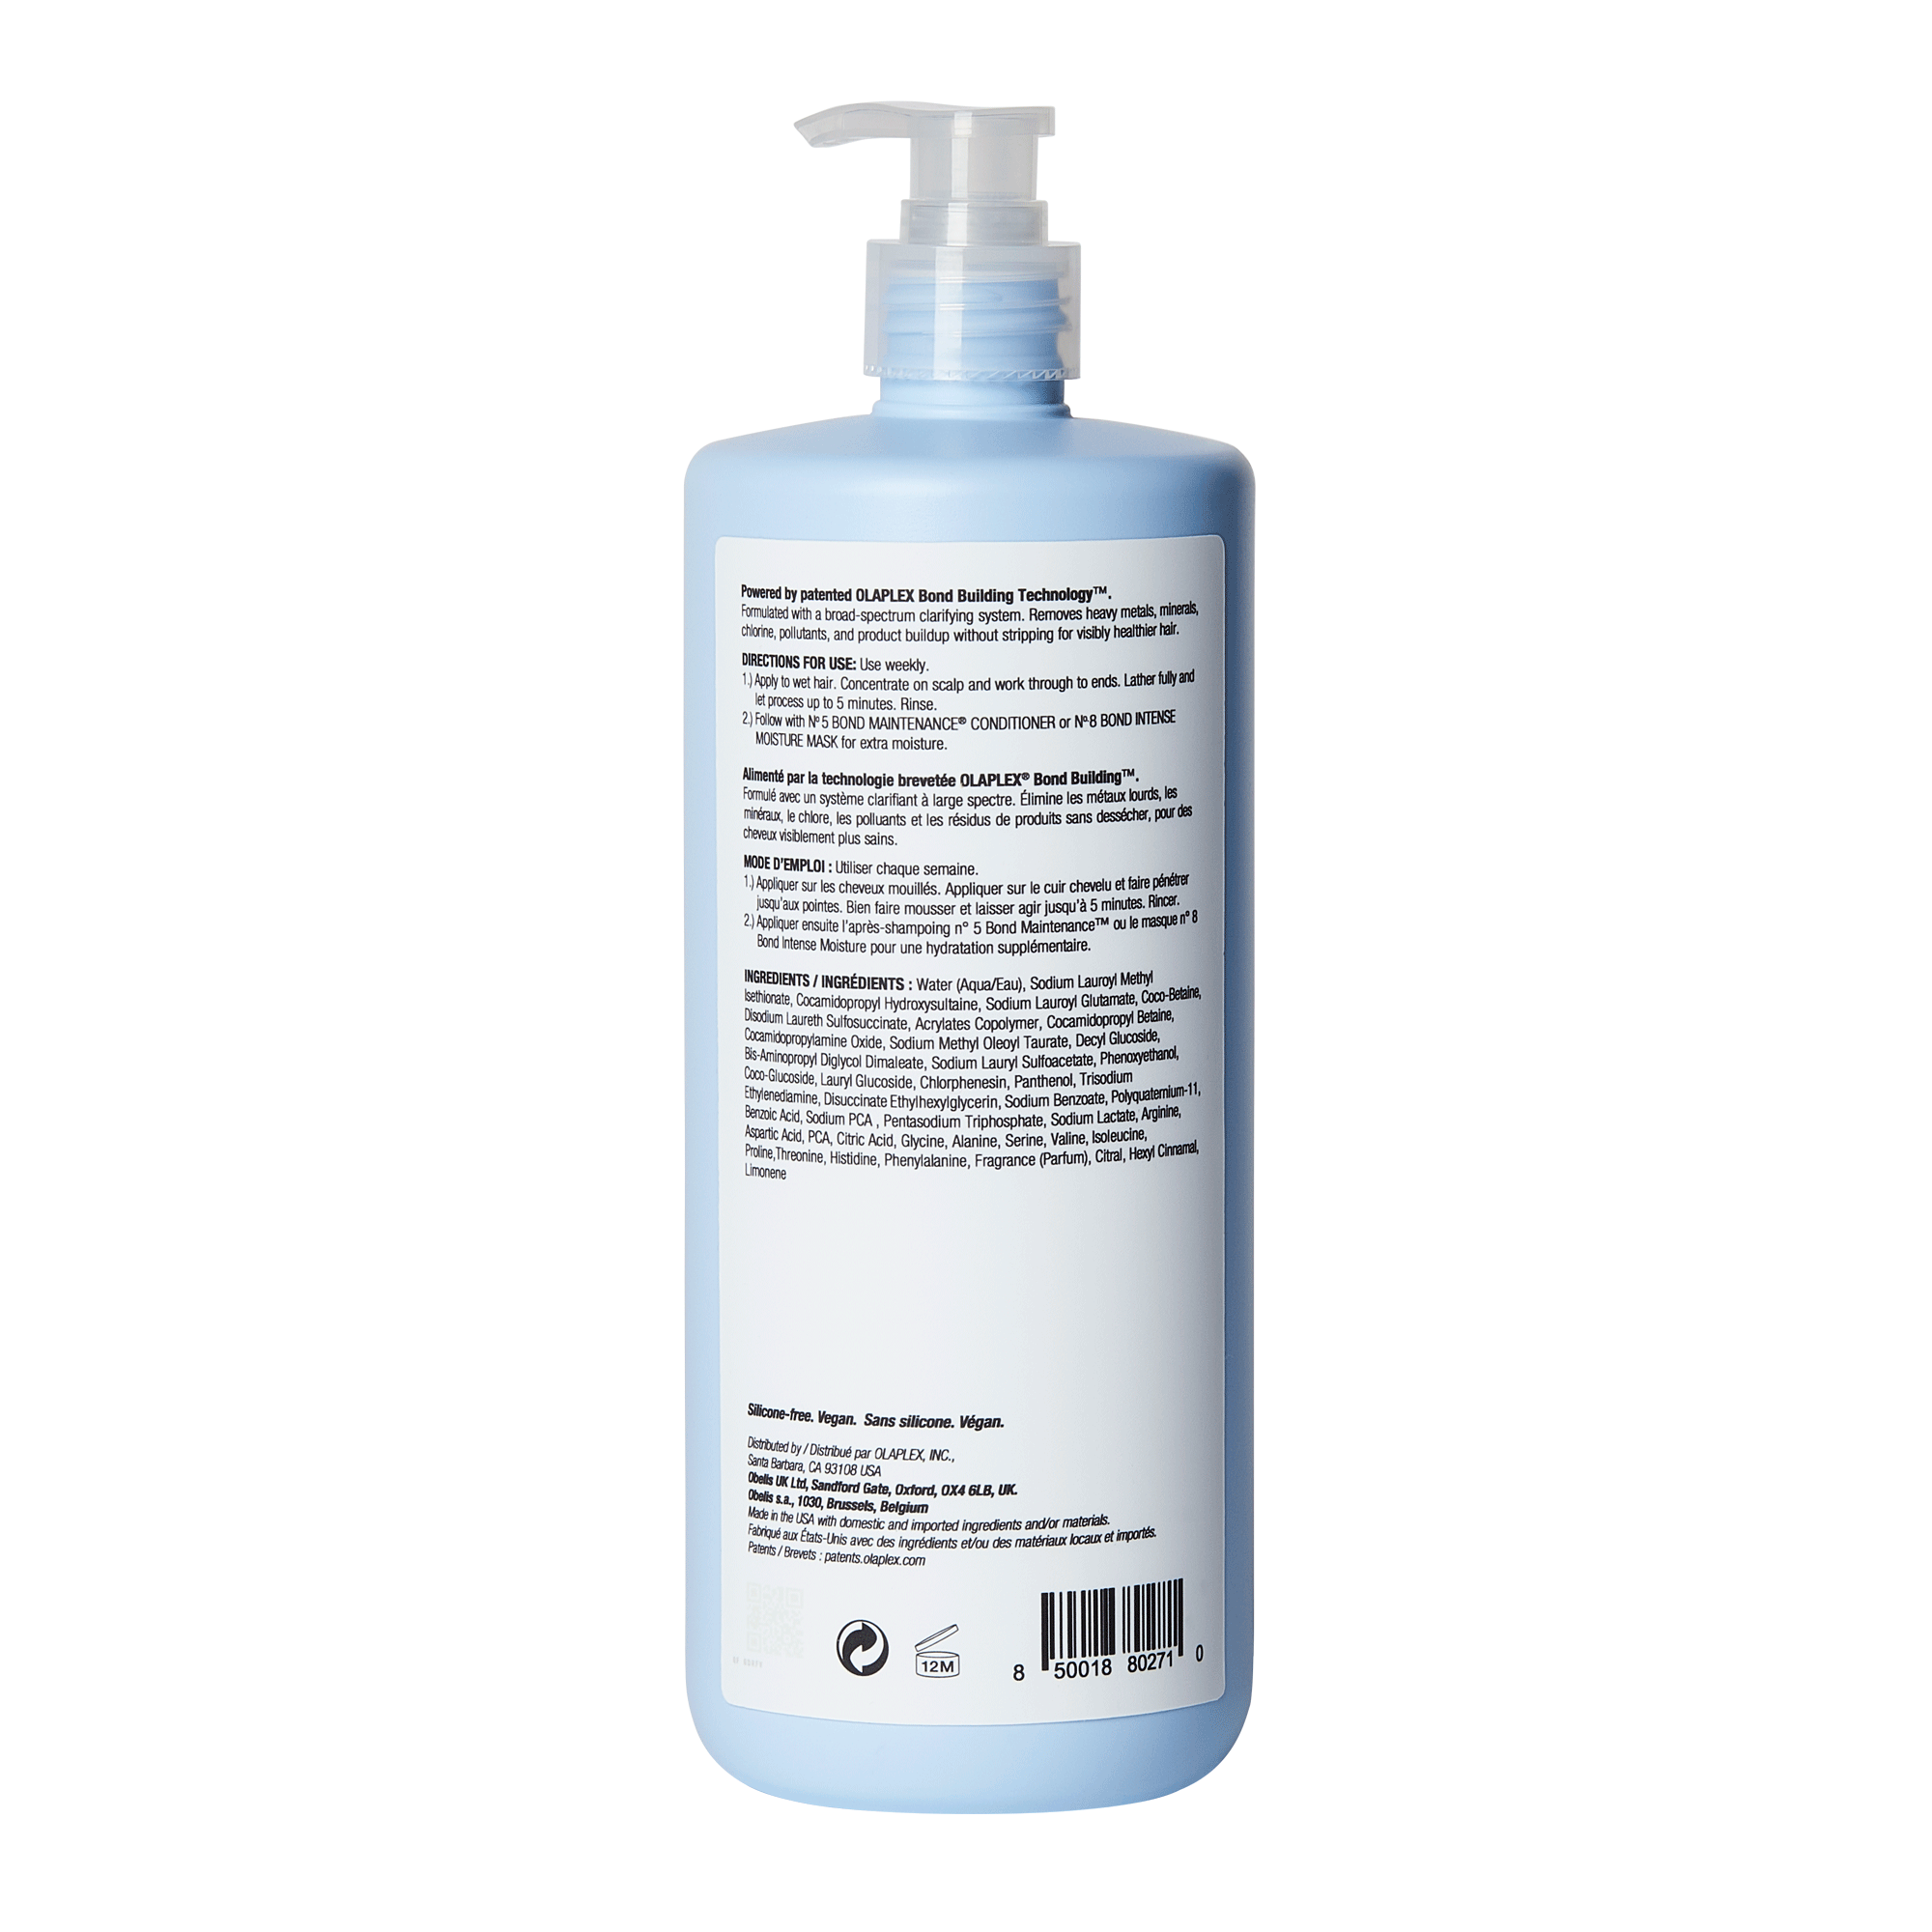 Olaplex No.4C Bond Maintenance Clarifying Shampoo 1000ml